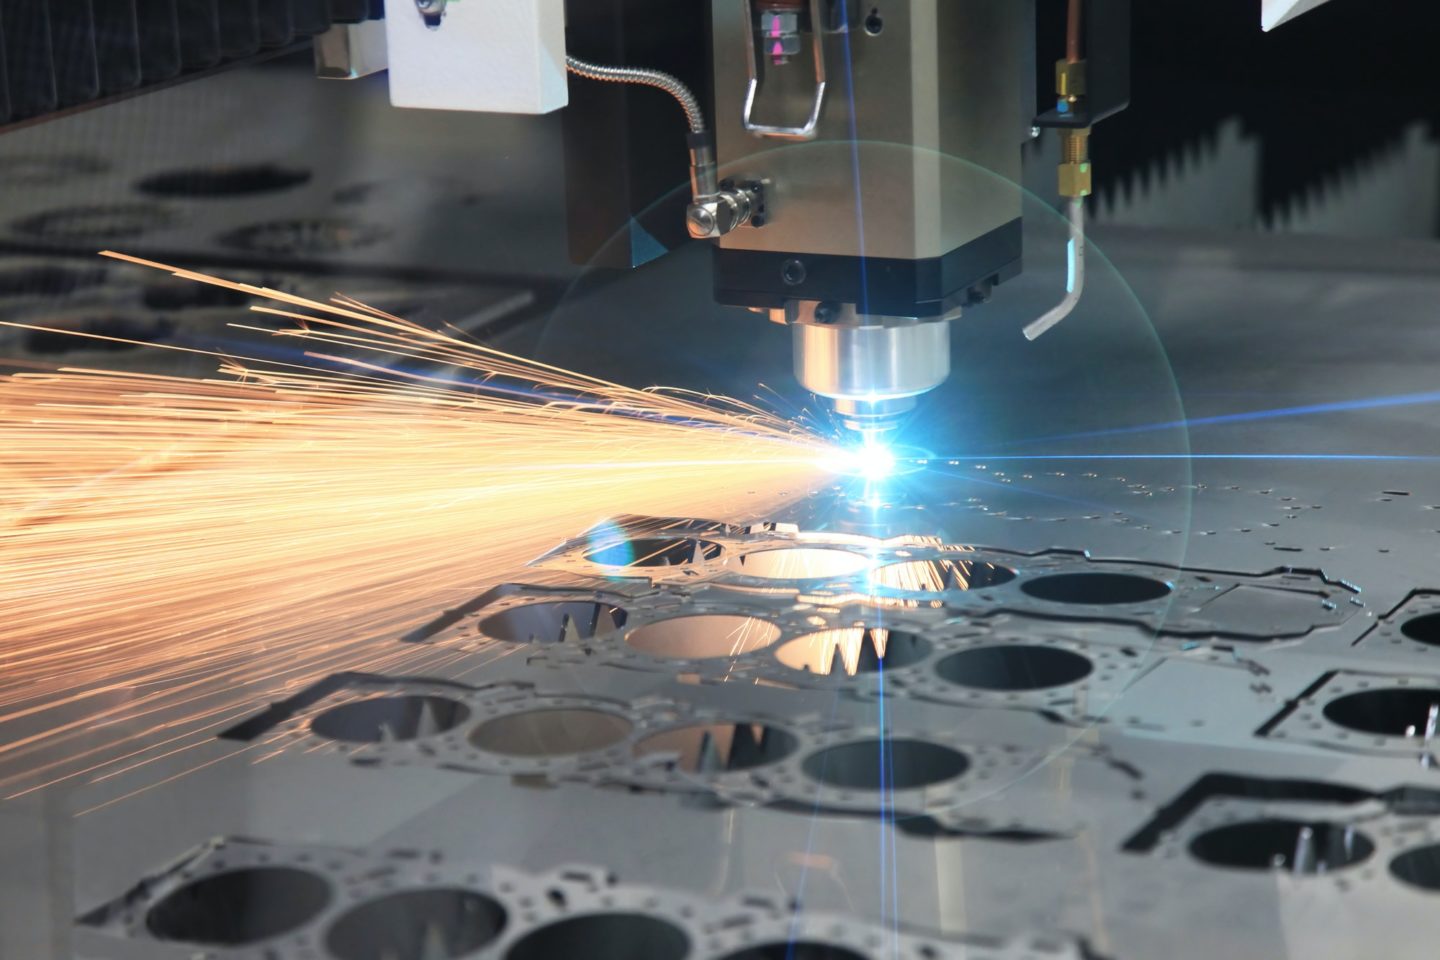 The hi-precision sheet cutting process by laser cut